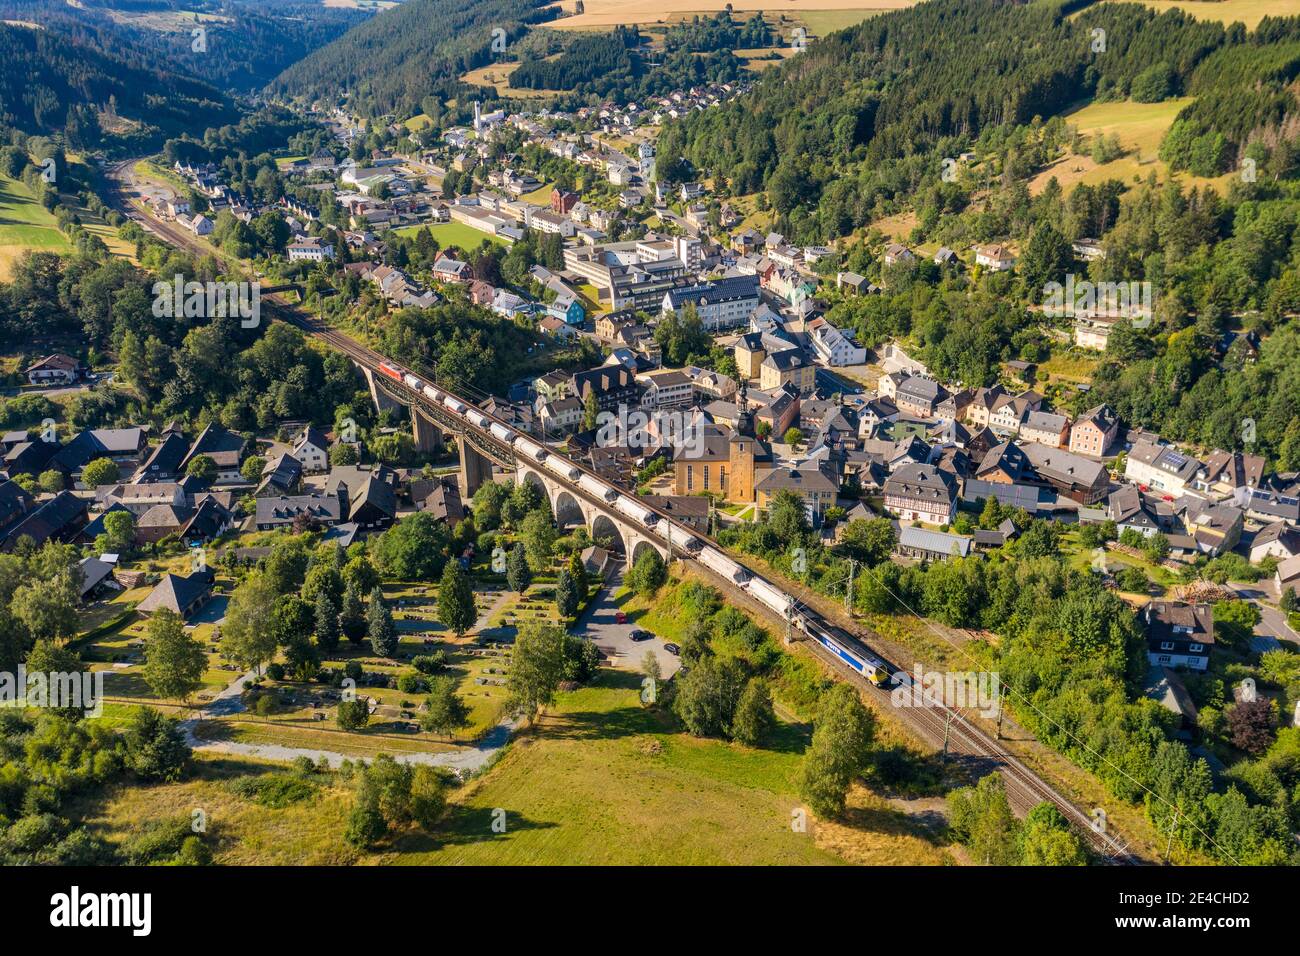 Germania, Baviera, Ludwigsstadt, treno, ponte, città, chiesa, case, vista aerea, vista obliqua Foto Stock